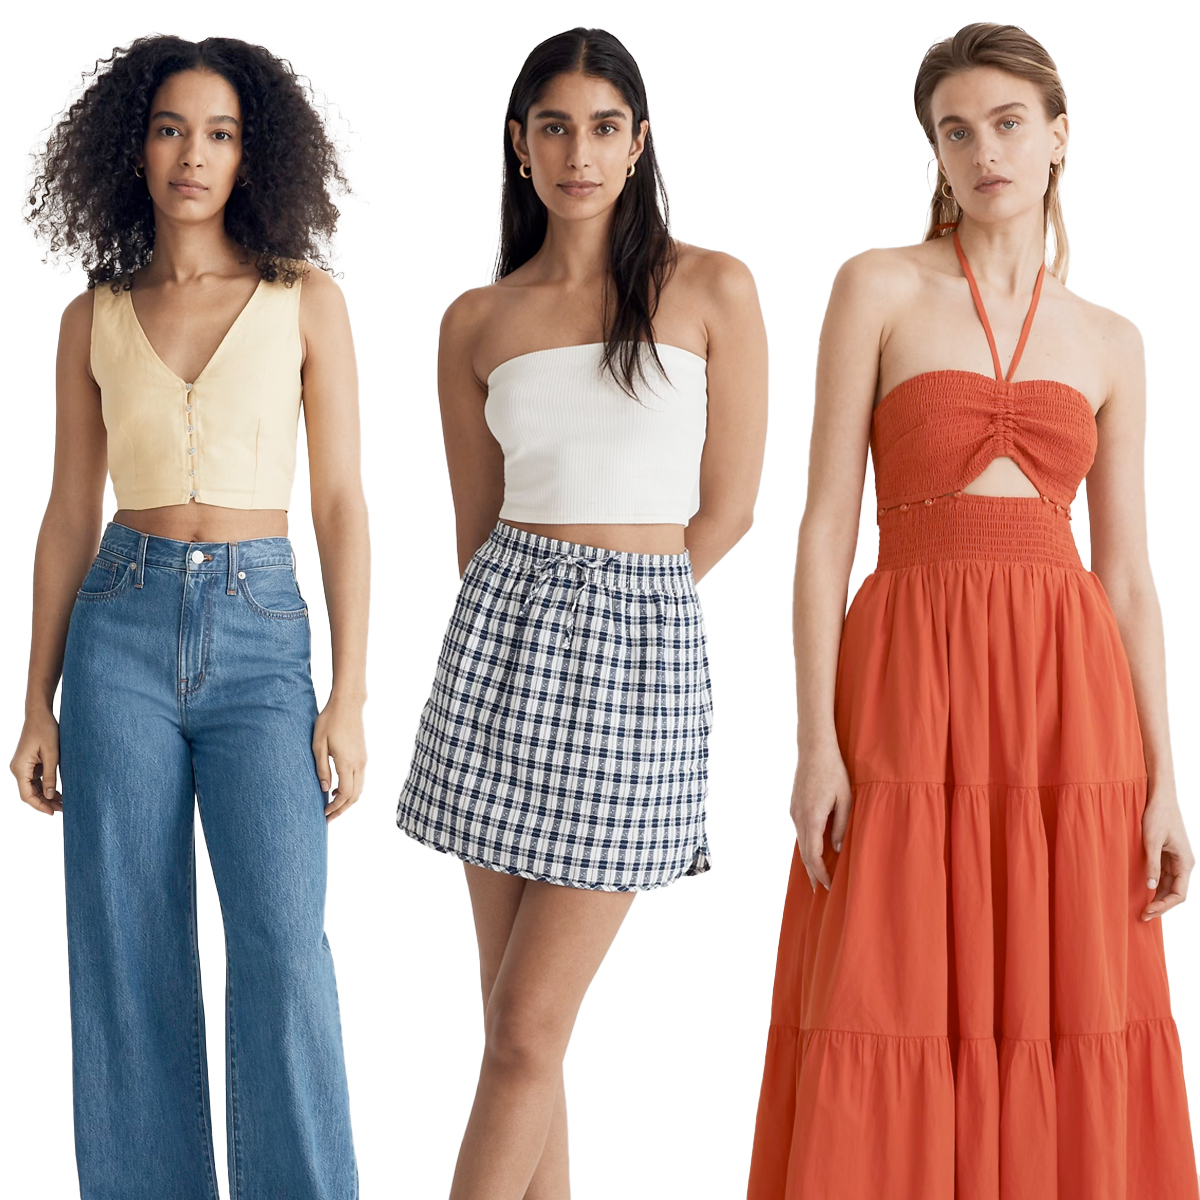 Madewell’s Big Summer Sale: Get 60% Off Dresses, Tops, Heels & More